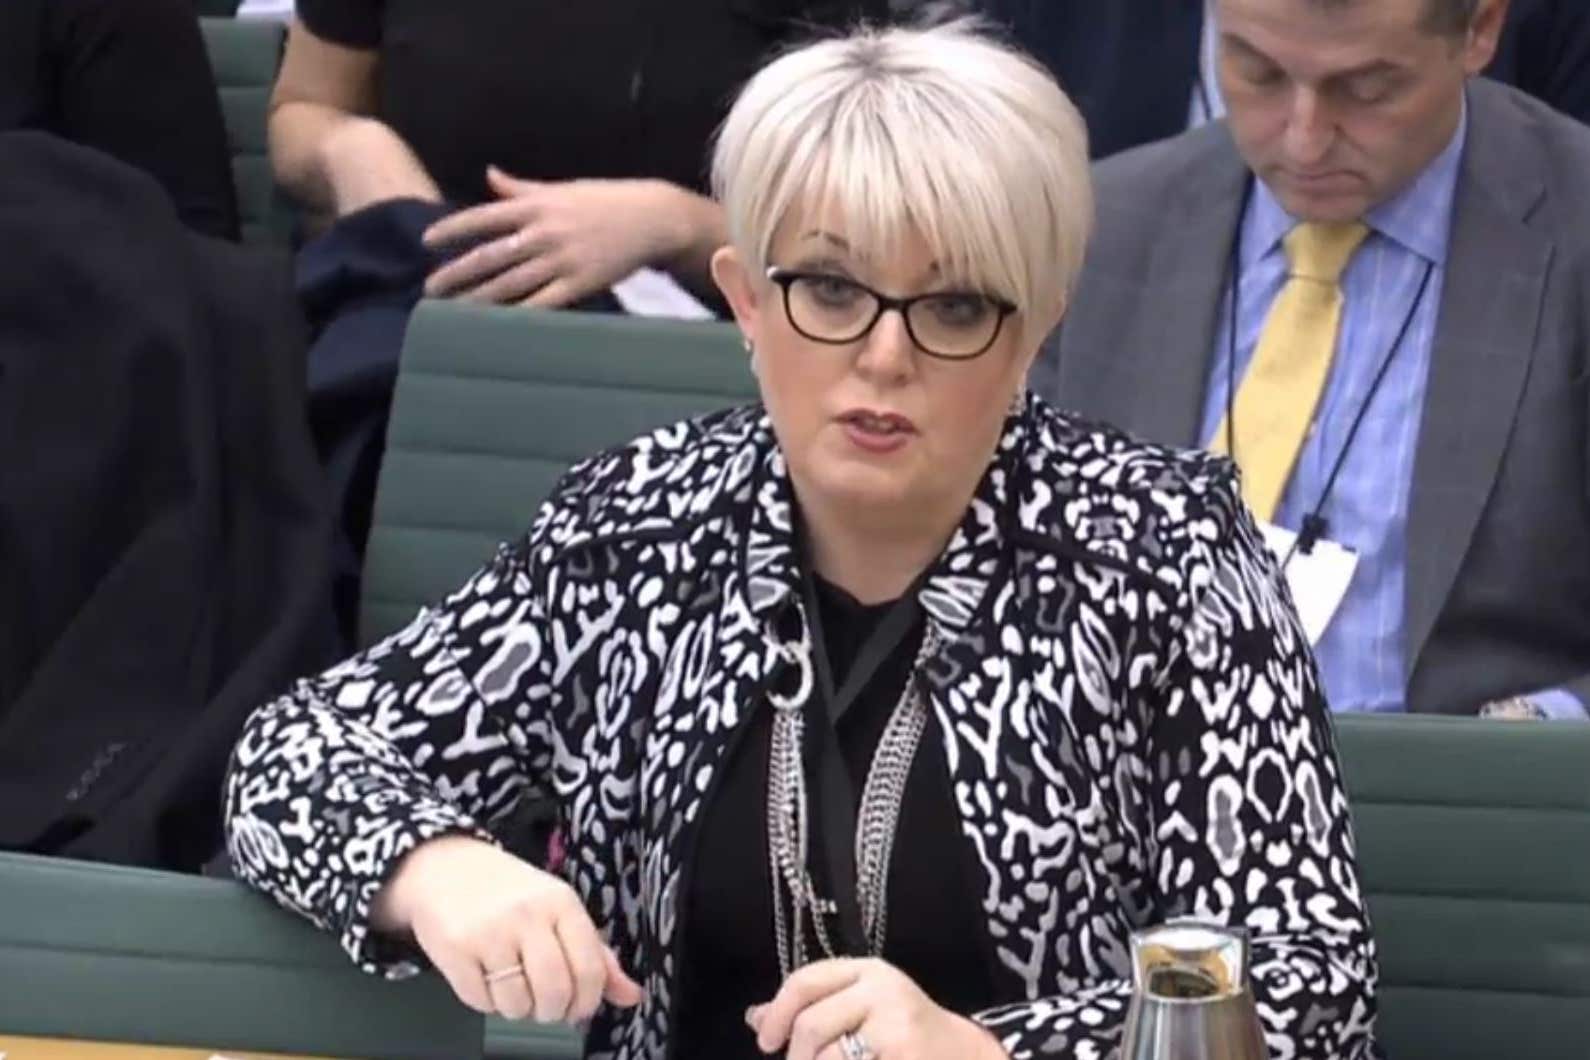 Victims’ commissioner Baroness Helen Newlove said the delays were unacceptable